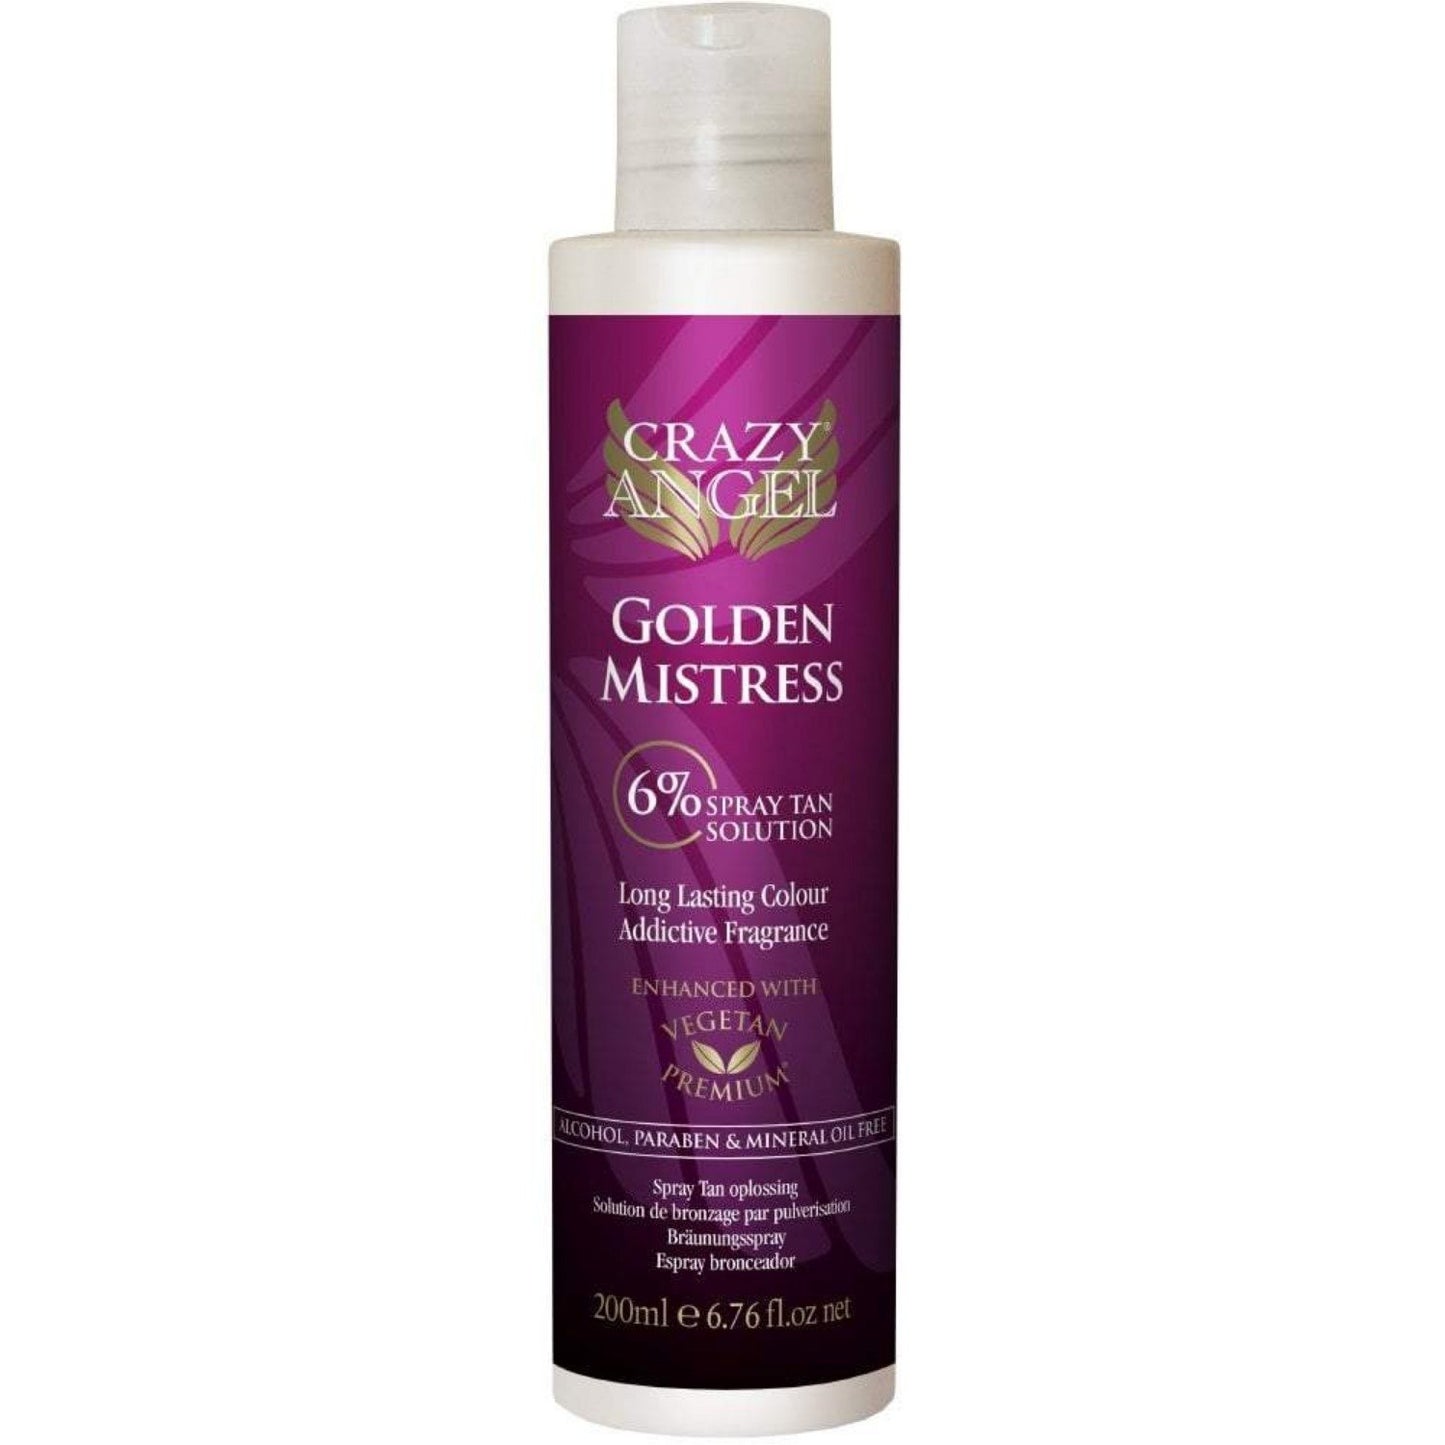 Crazy Angel Golden Mistress 6% Spray Tan Solution 200ml (SHOP)